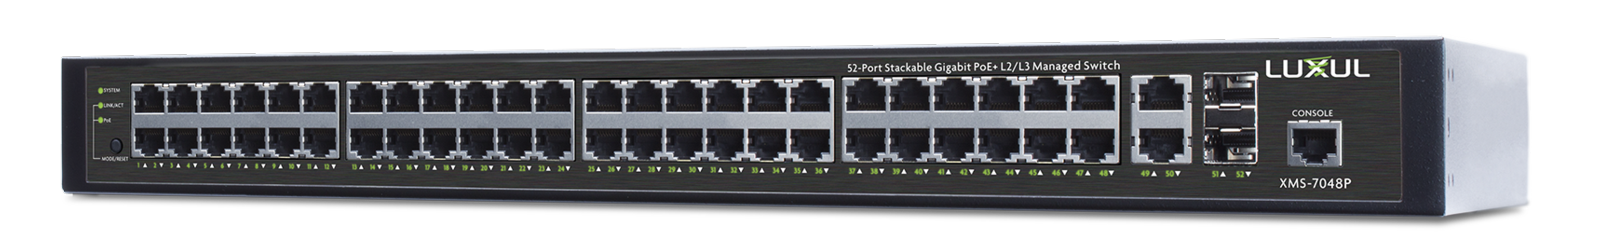 52 port stackable gigabit poe l2 l3 managed switch xms 7048